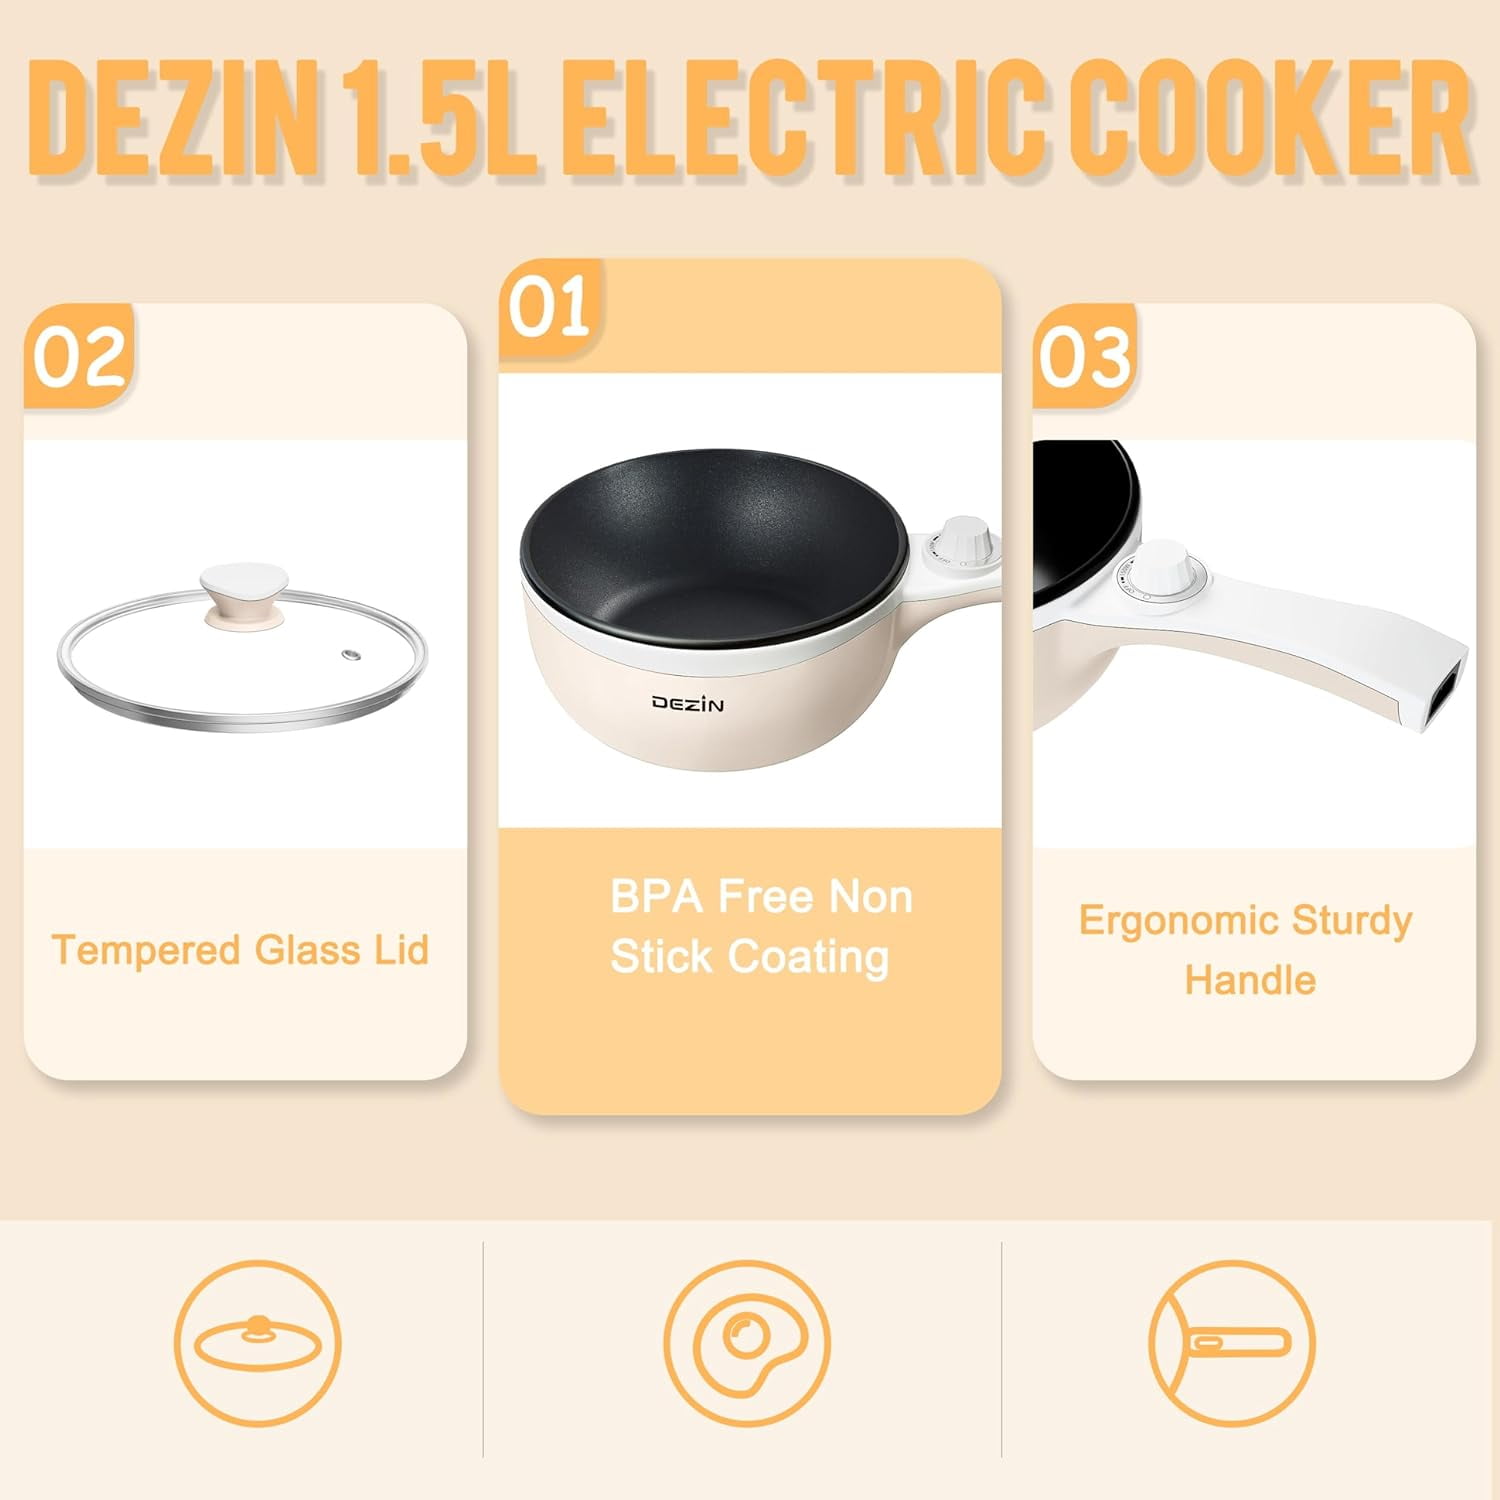 Dezin Hot Pot Electric, Rapid Noodles Cooker, Stainless Steel Electric Pot  1.6 Liter, Perfect for Ramen, Egg, Pasta, Dumpling, Soup, Porridge, Oatmeal